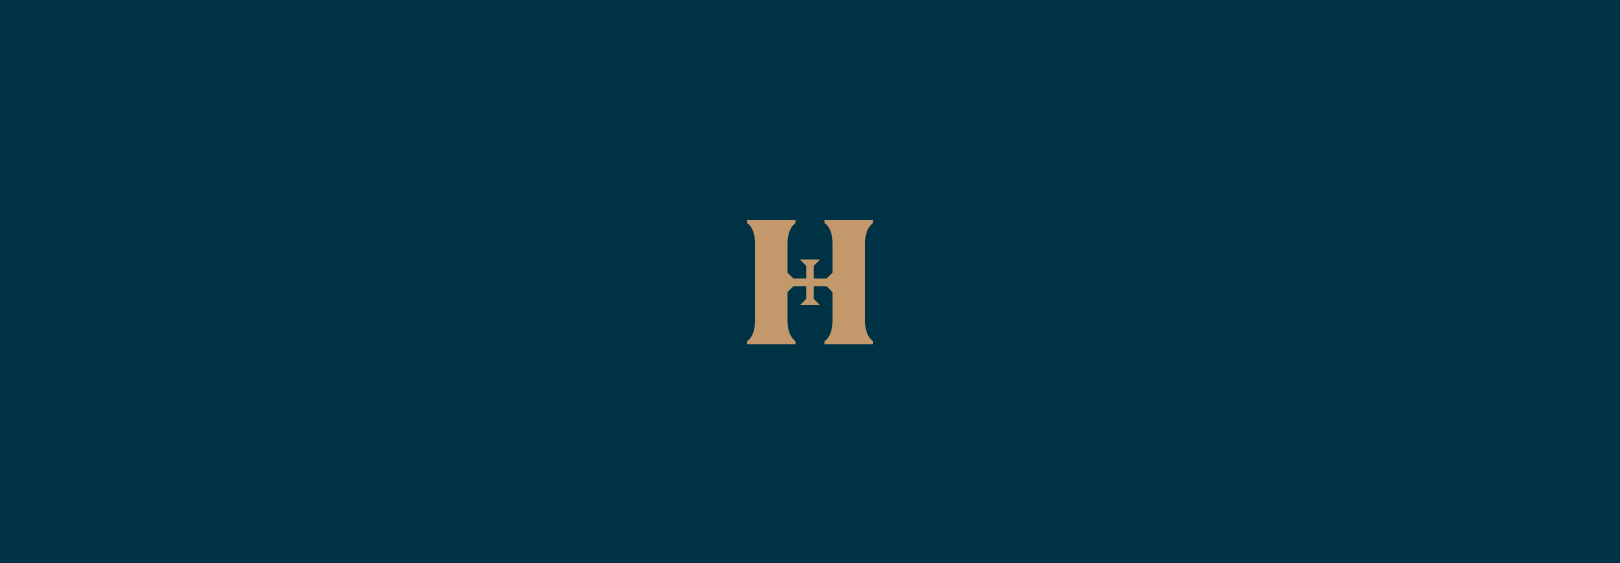 Hayasy Group branding, logo design and website done by indigo branding in Yerevan